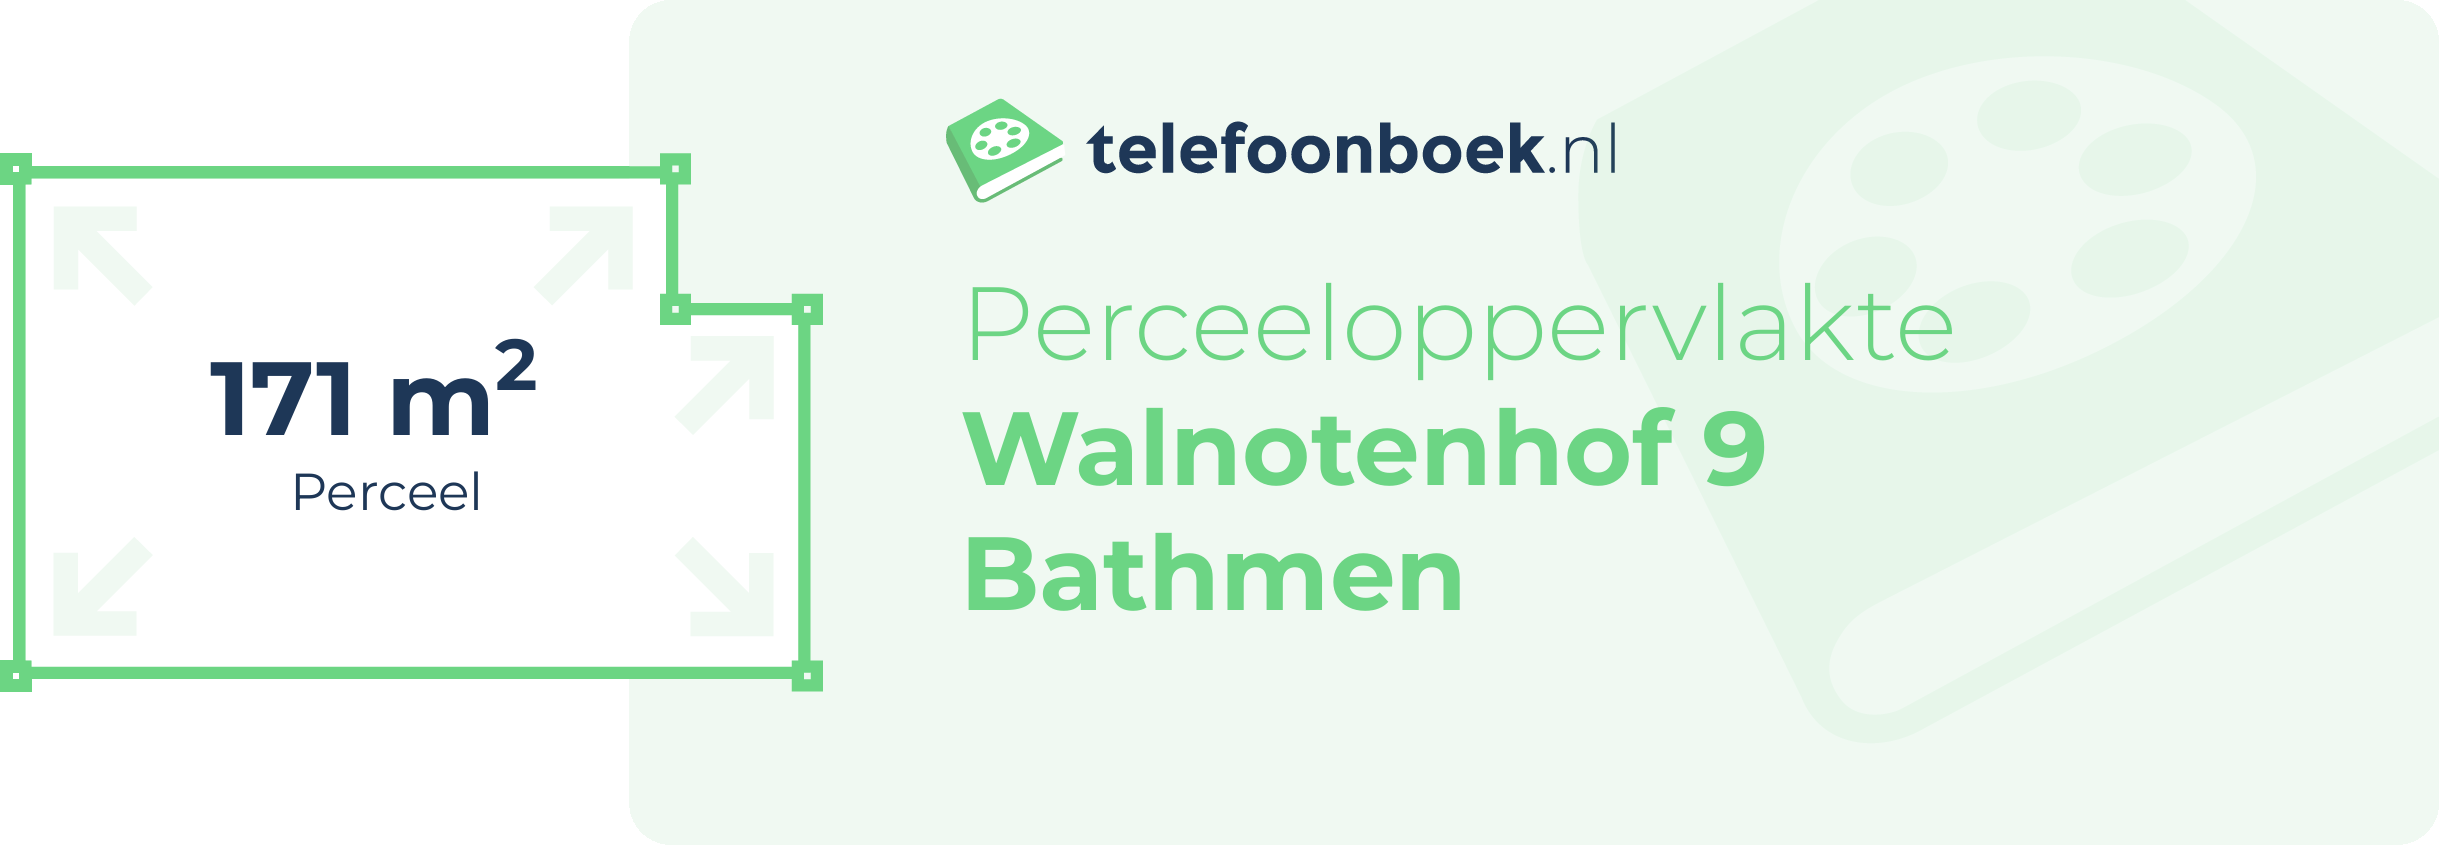 Perceeloppervlakte Walnotenhof 9 Bathmen